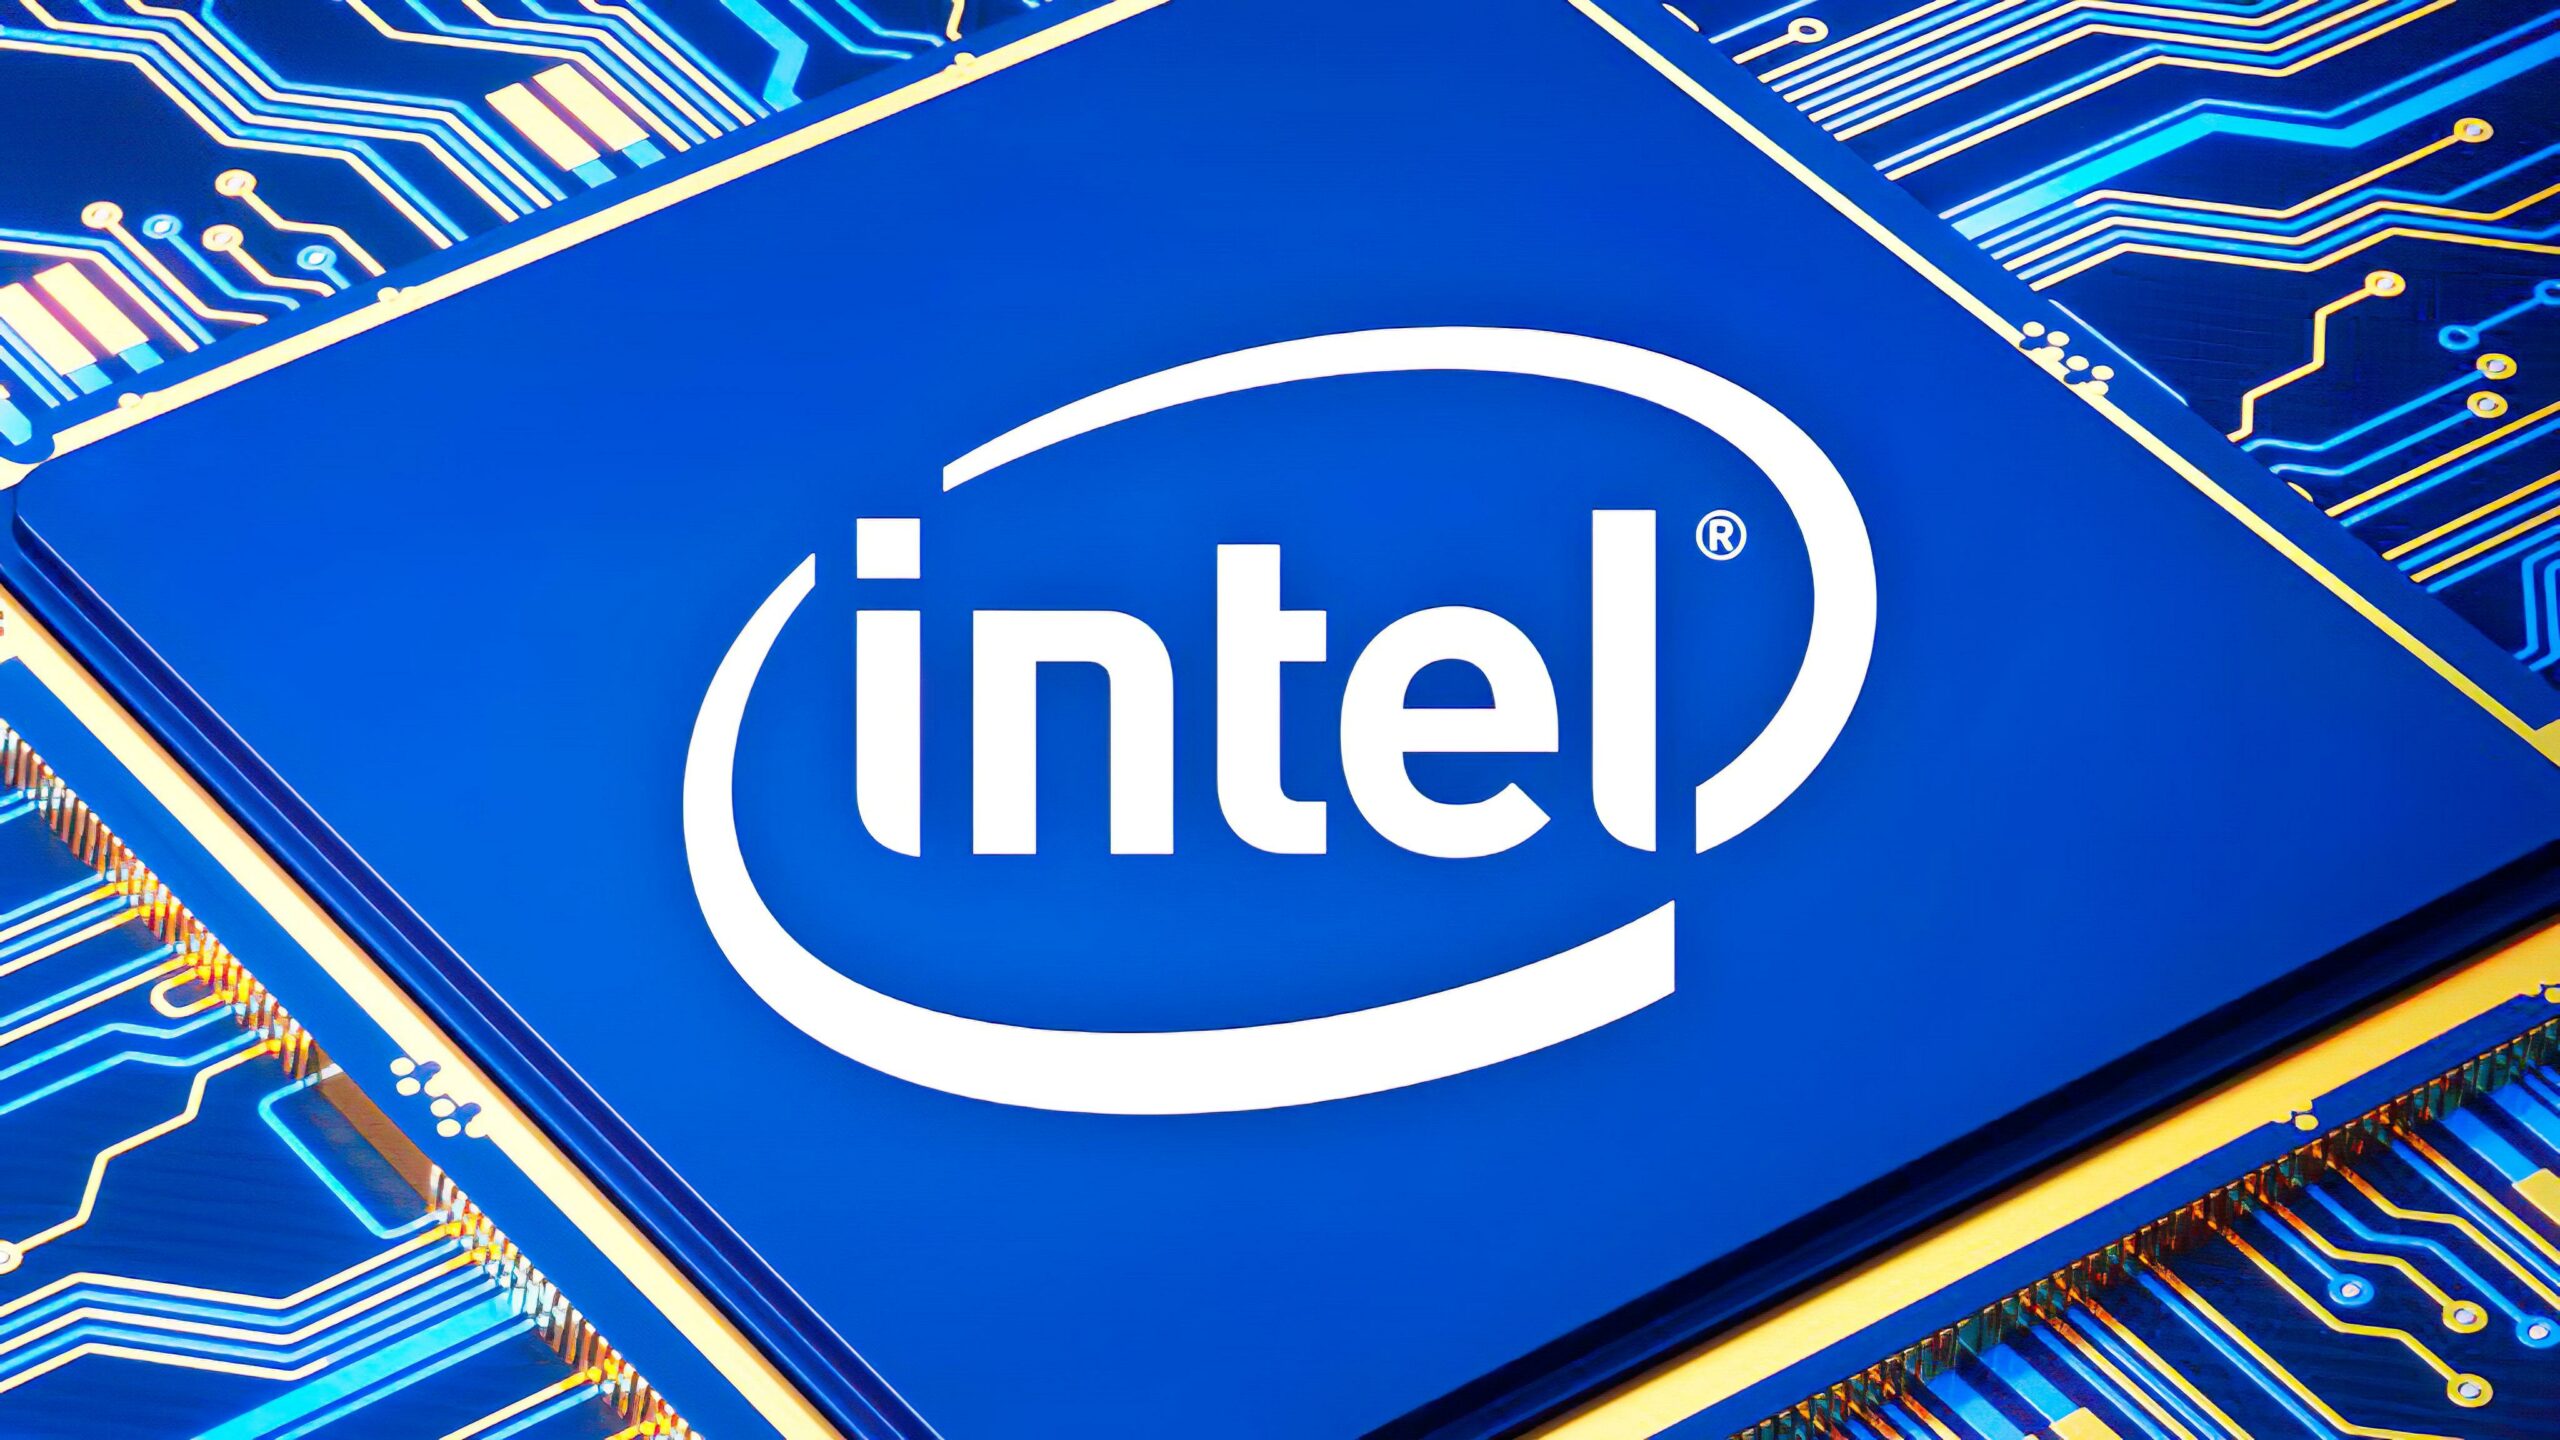 Звук интел. Intel logo 2022. Intel Core i7-1165g. Интел логотип 2021. Логотип процессора Интел.